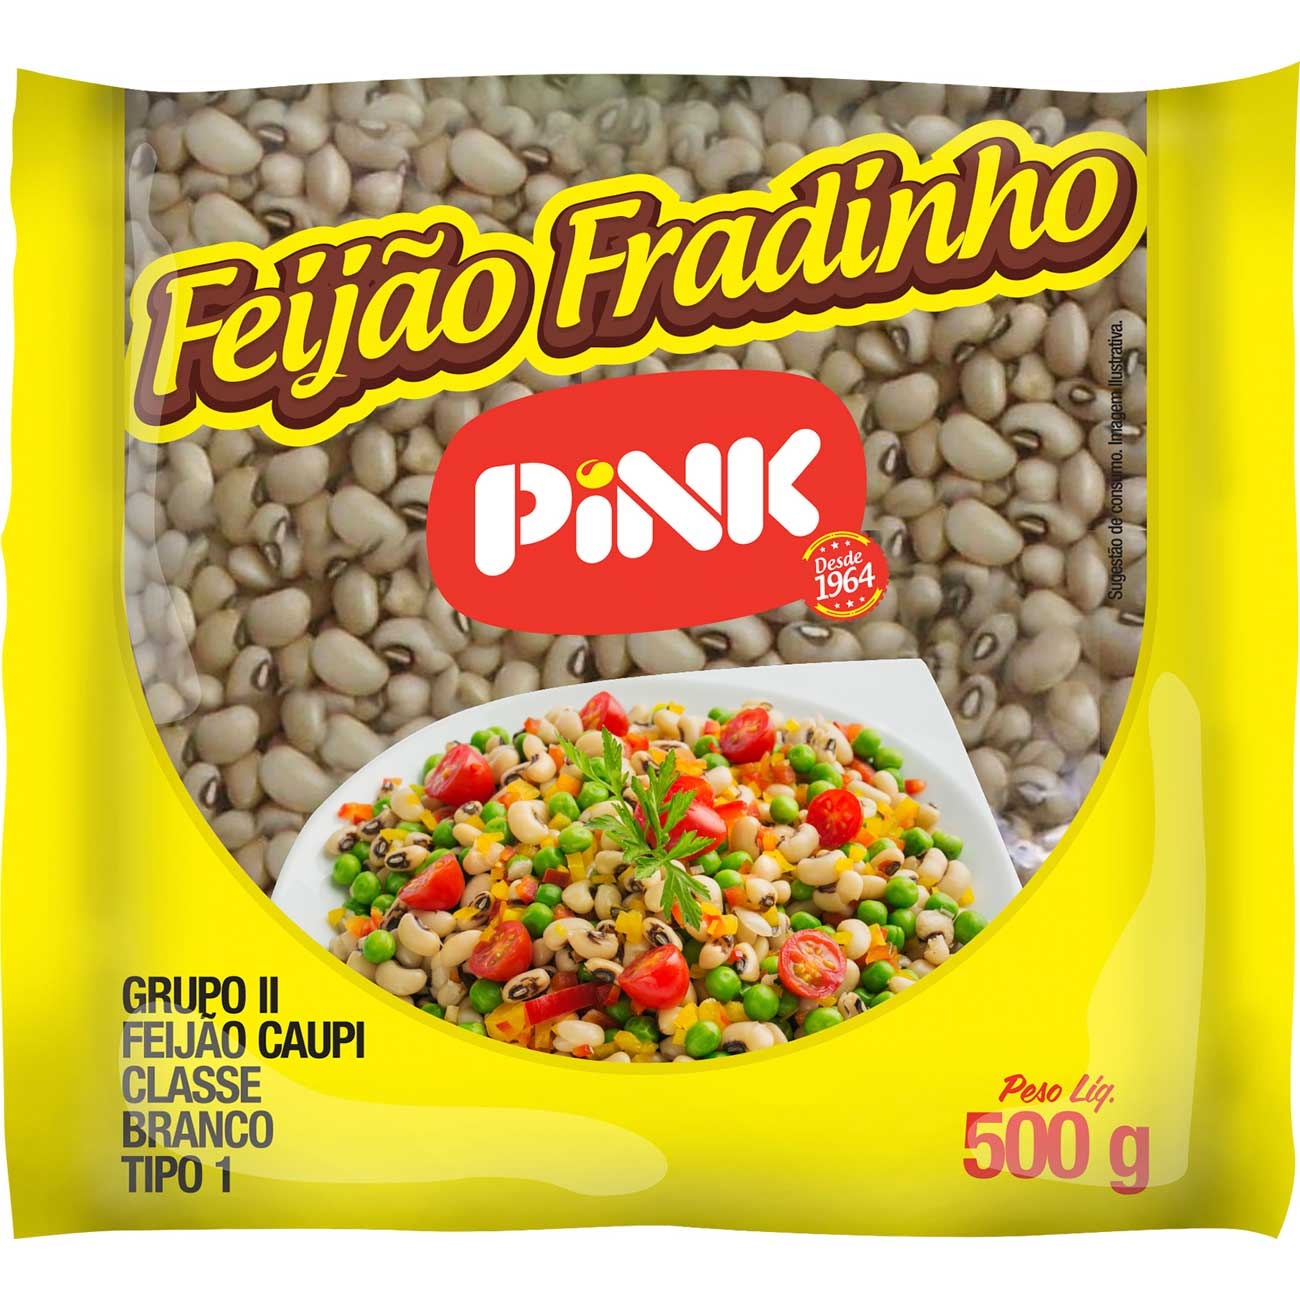 Feijão Fradinho Pink 500g - Compra Food Service